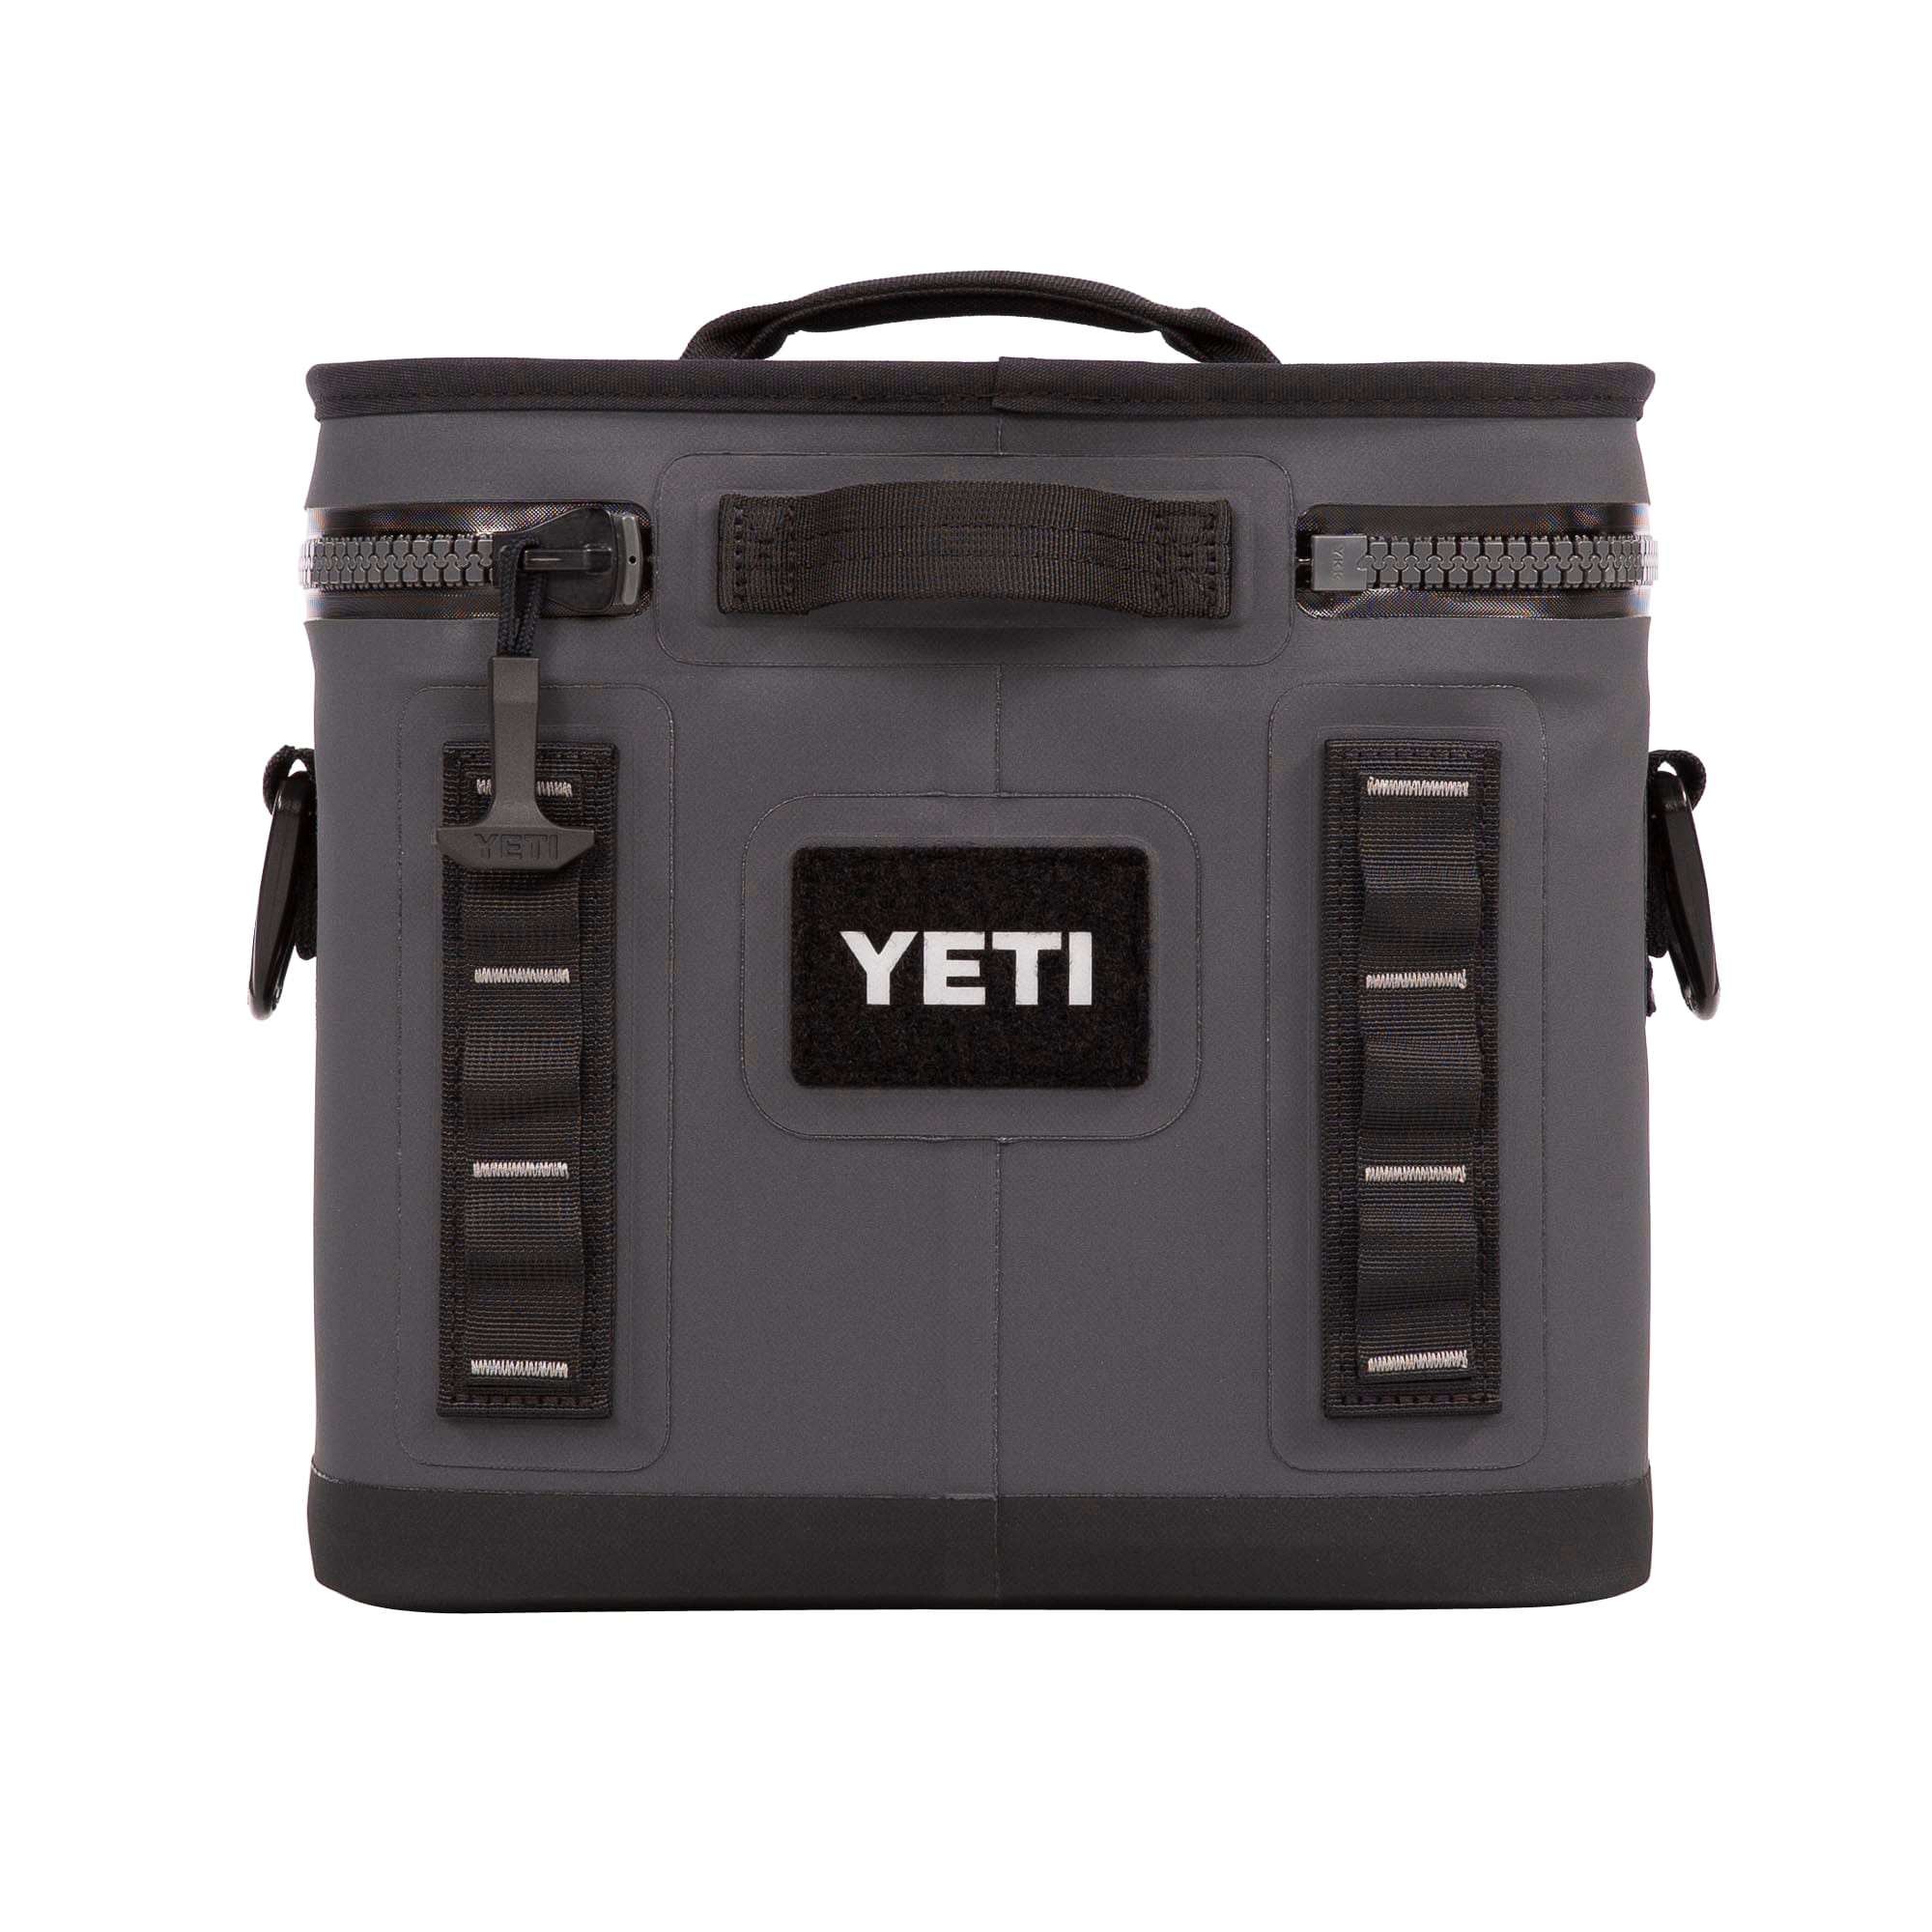 Yeti Hopper Flip 8 Soft Cooler - Charcoal (18010130001) for sale